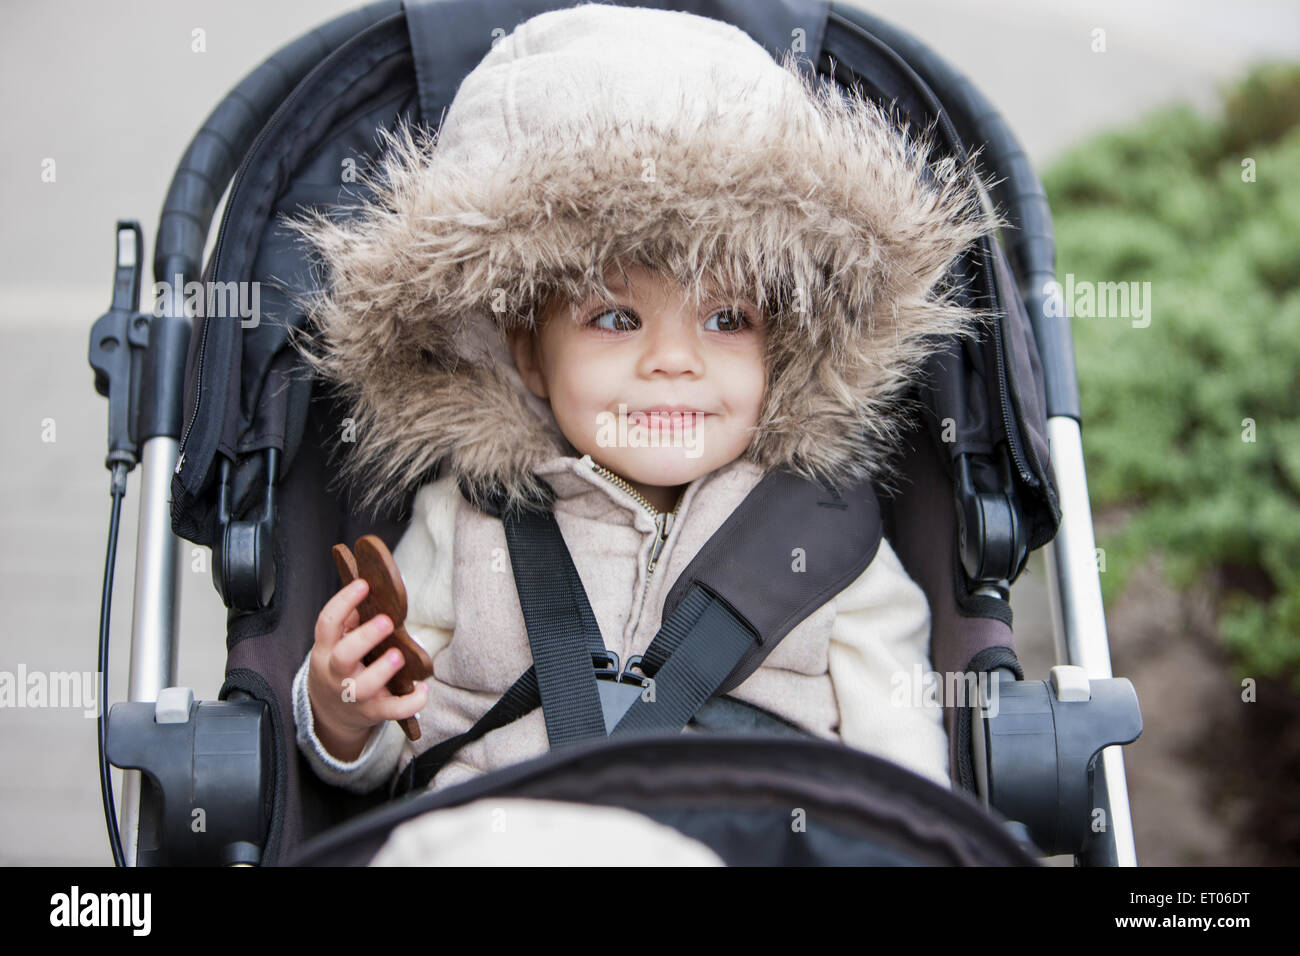 Smiling girl in fur hood riding in stroller Stock Photo